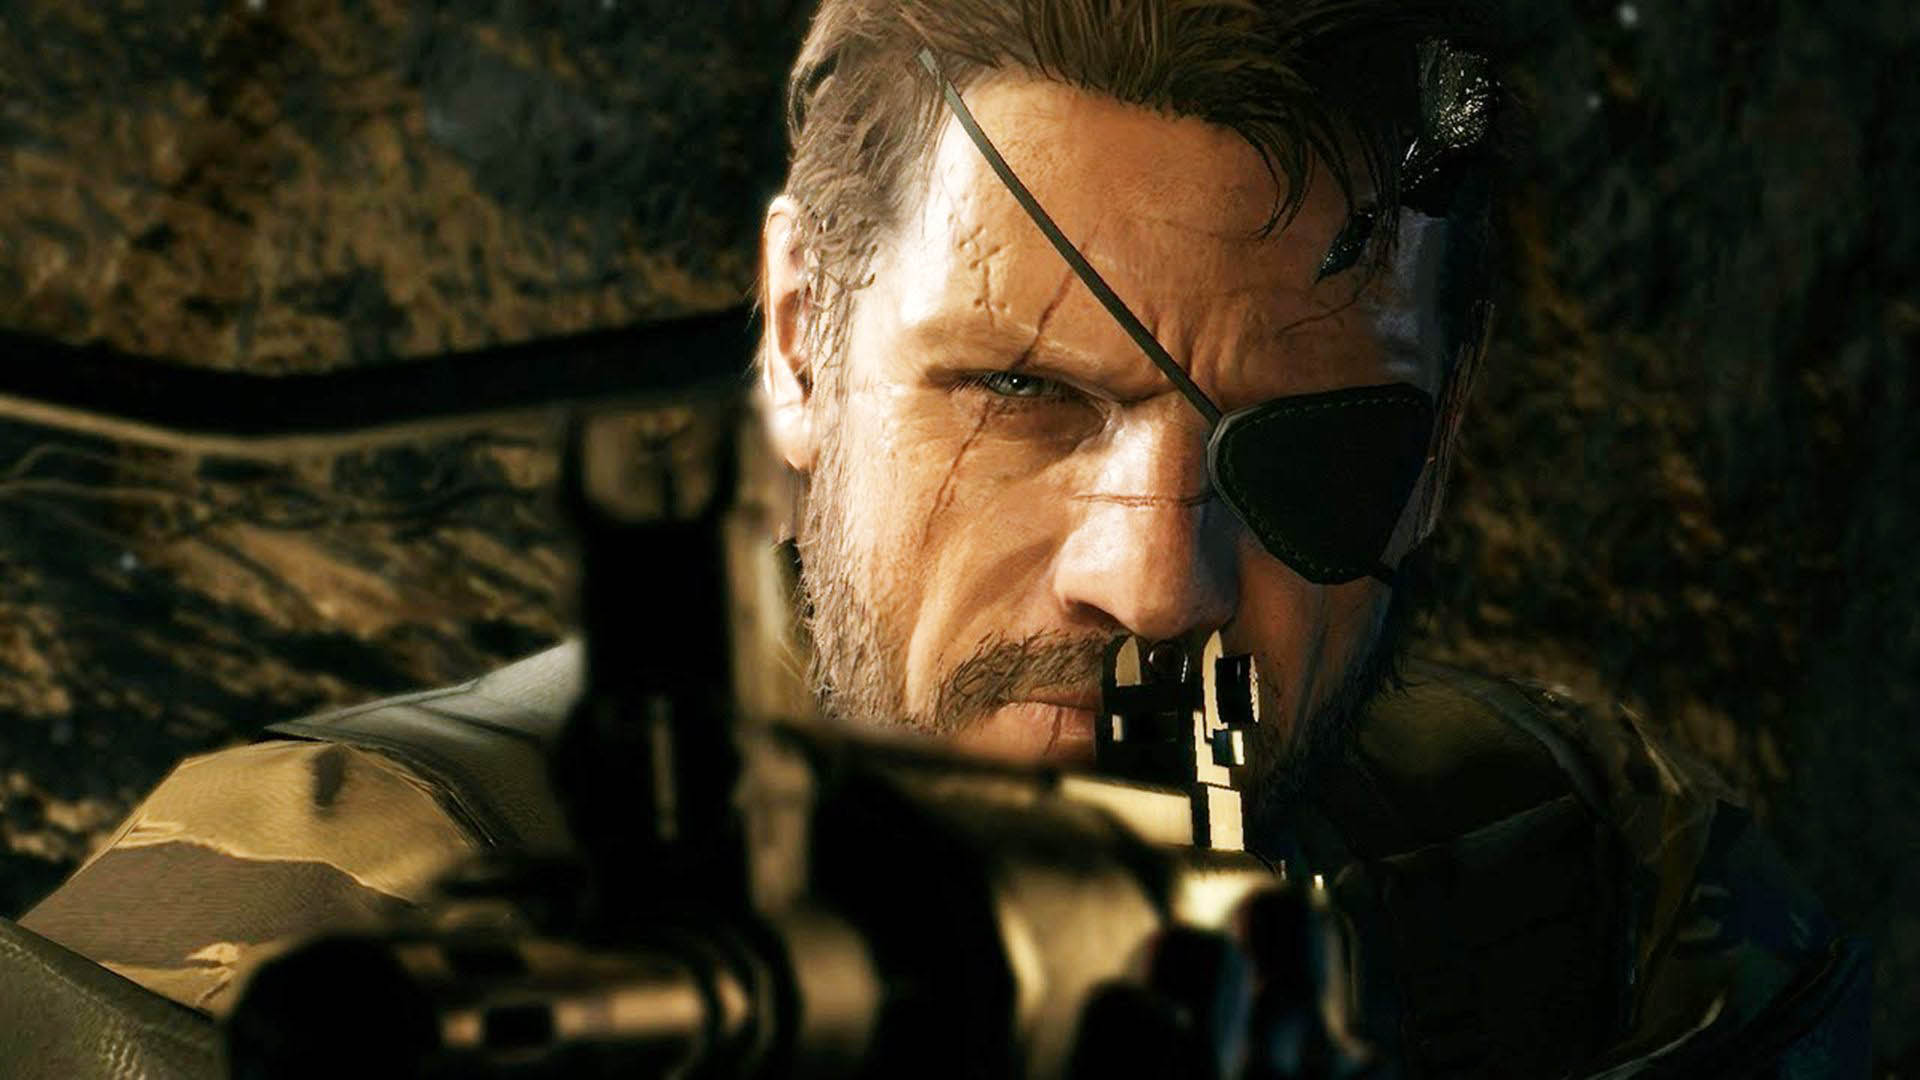 Big Boss Aiming Metal Gear Solid V The Phantom Pain